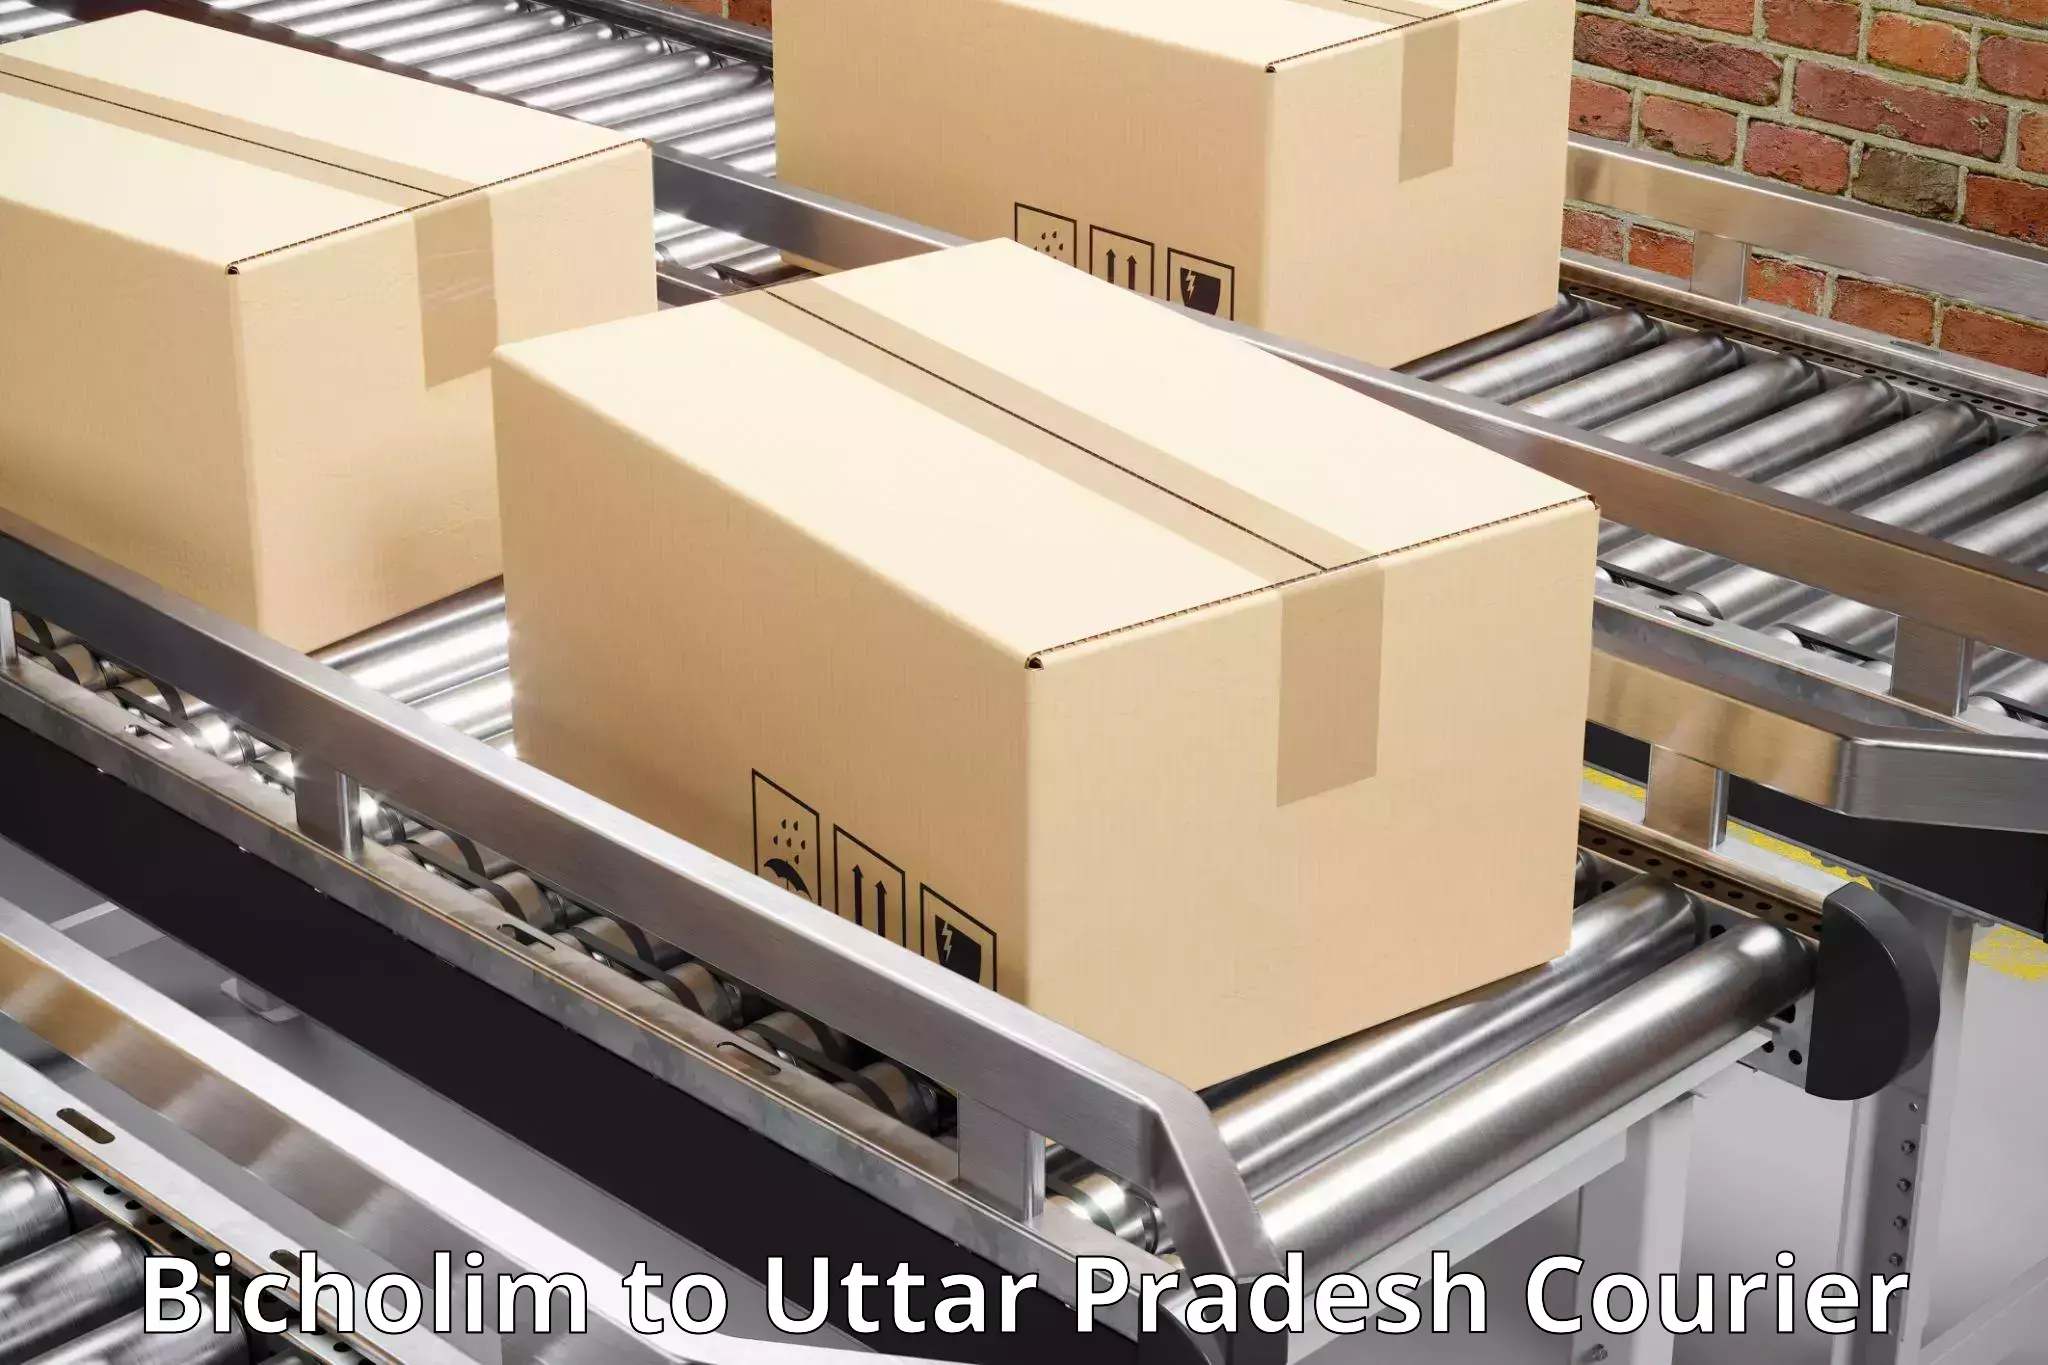 Express courier facilities Bicholim to Noida